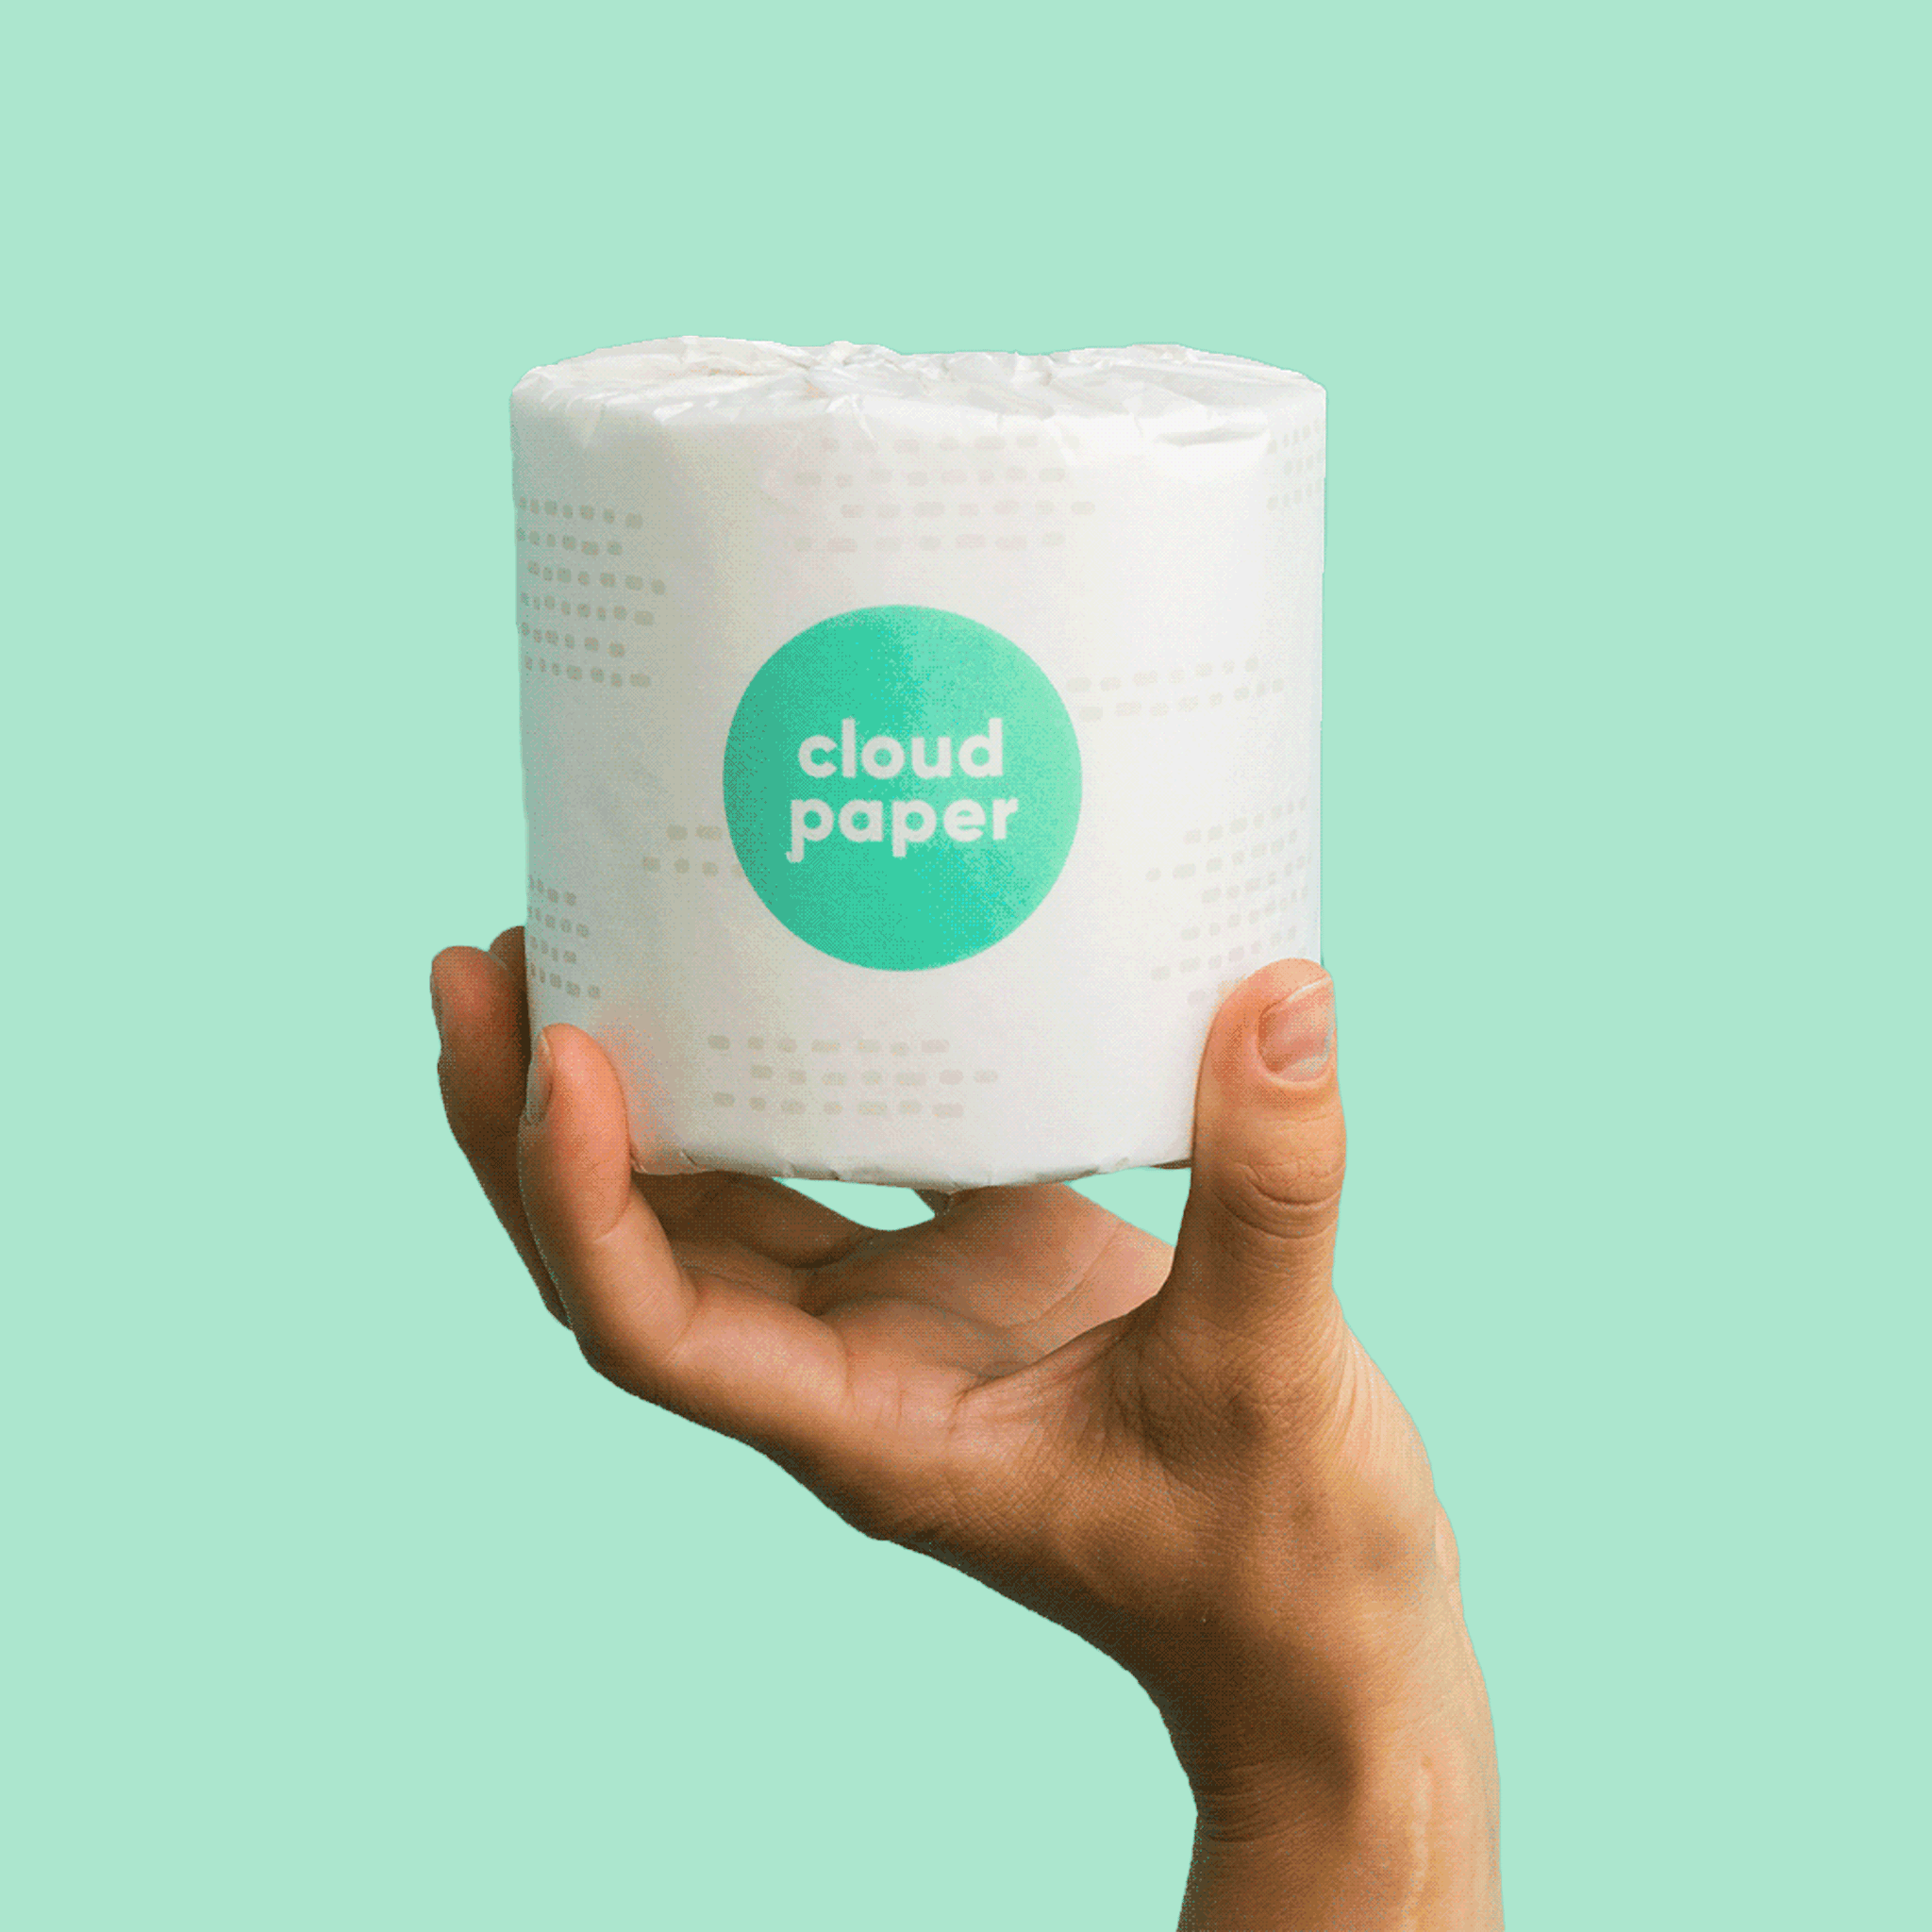 Source bulk pack toilet tissue paper ultra soft toiet paper in